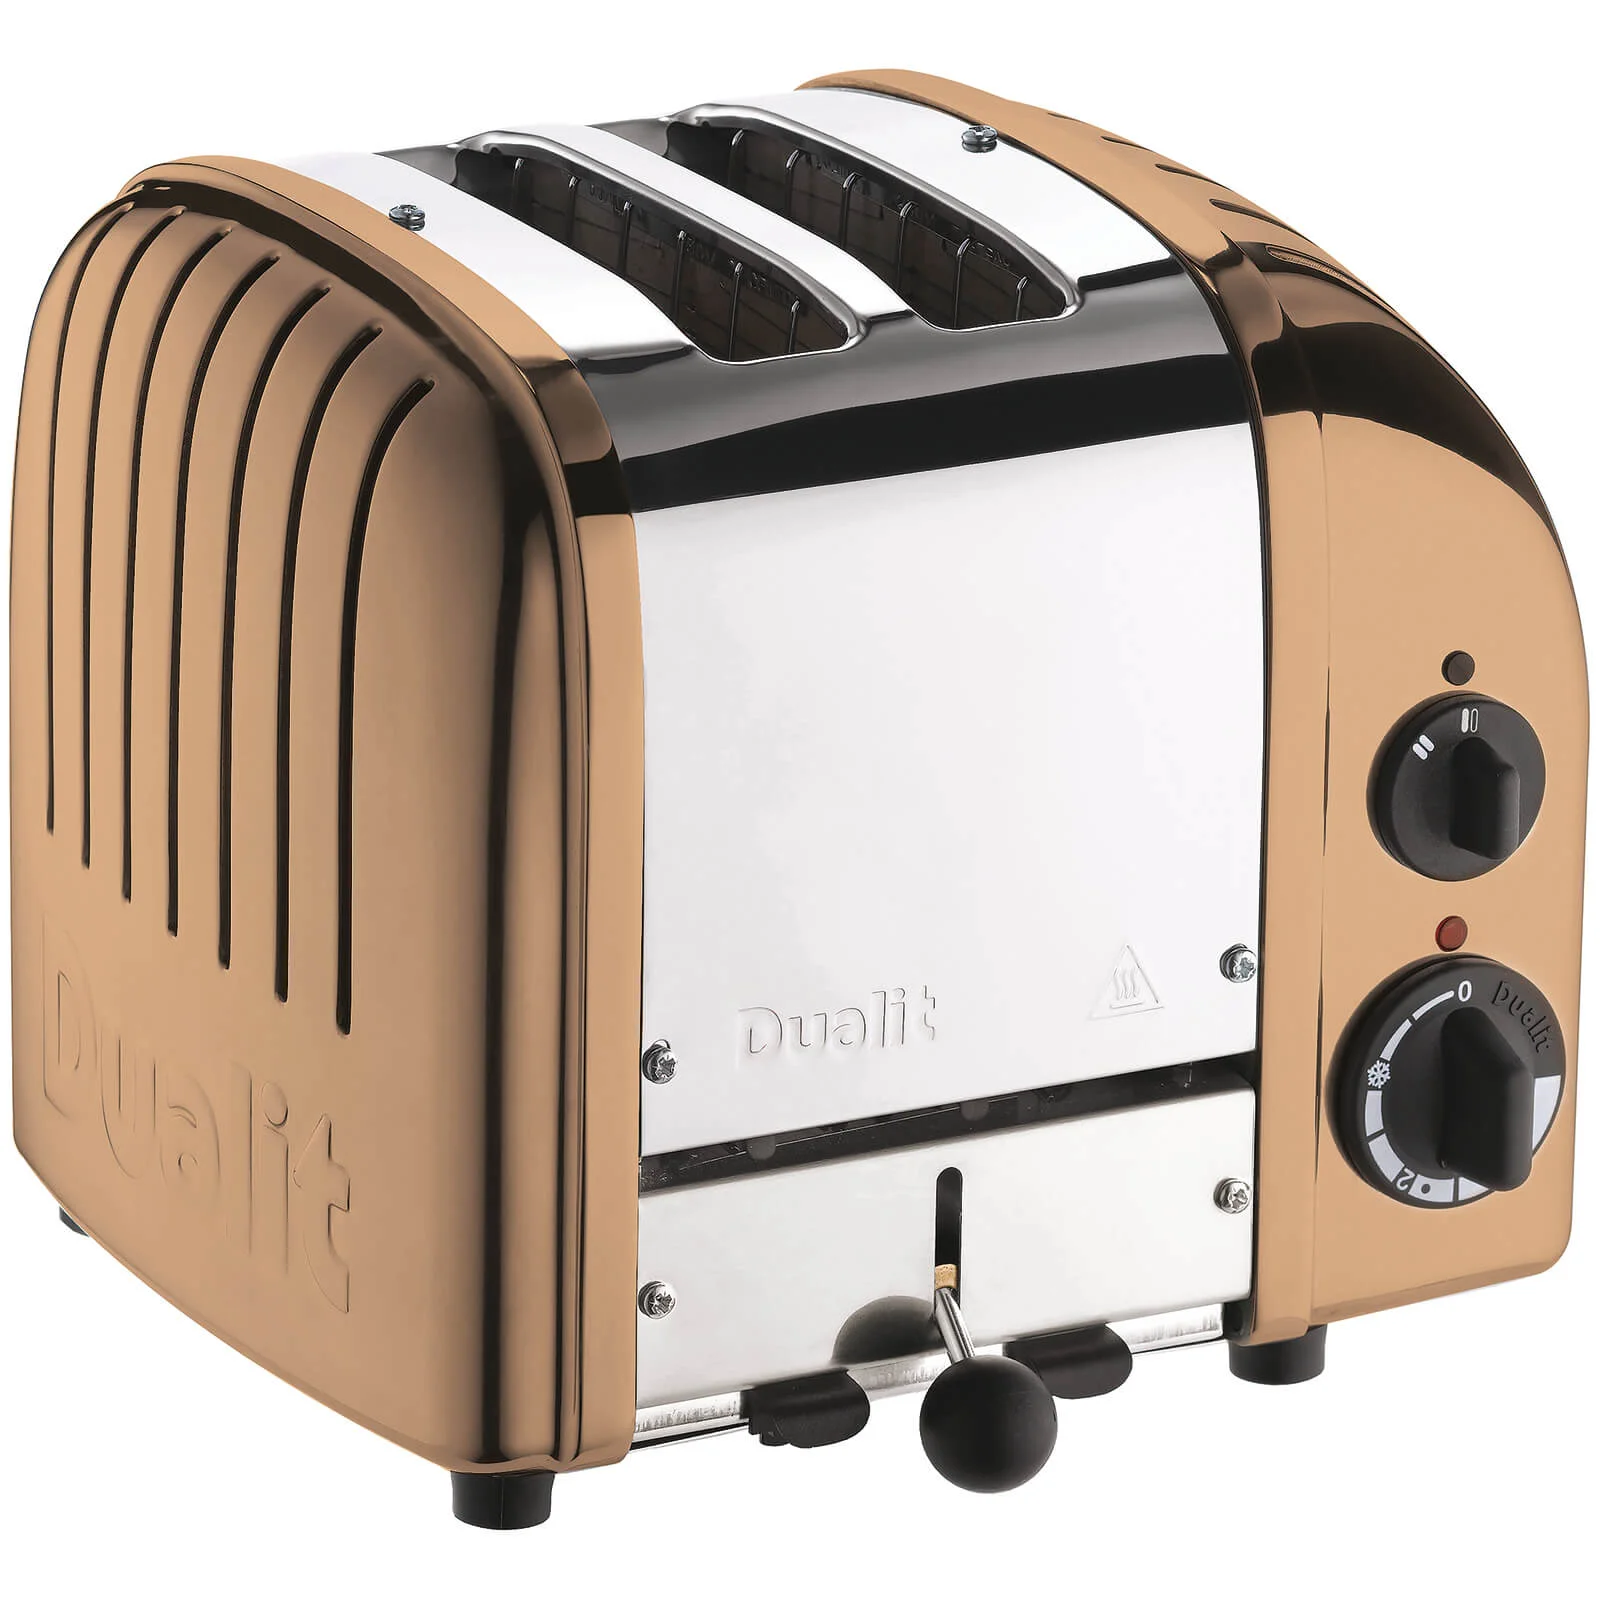 Dualit 27450 Classic Vario 2 Slot Toaster - Copper Image 1